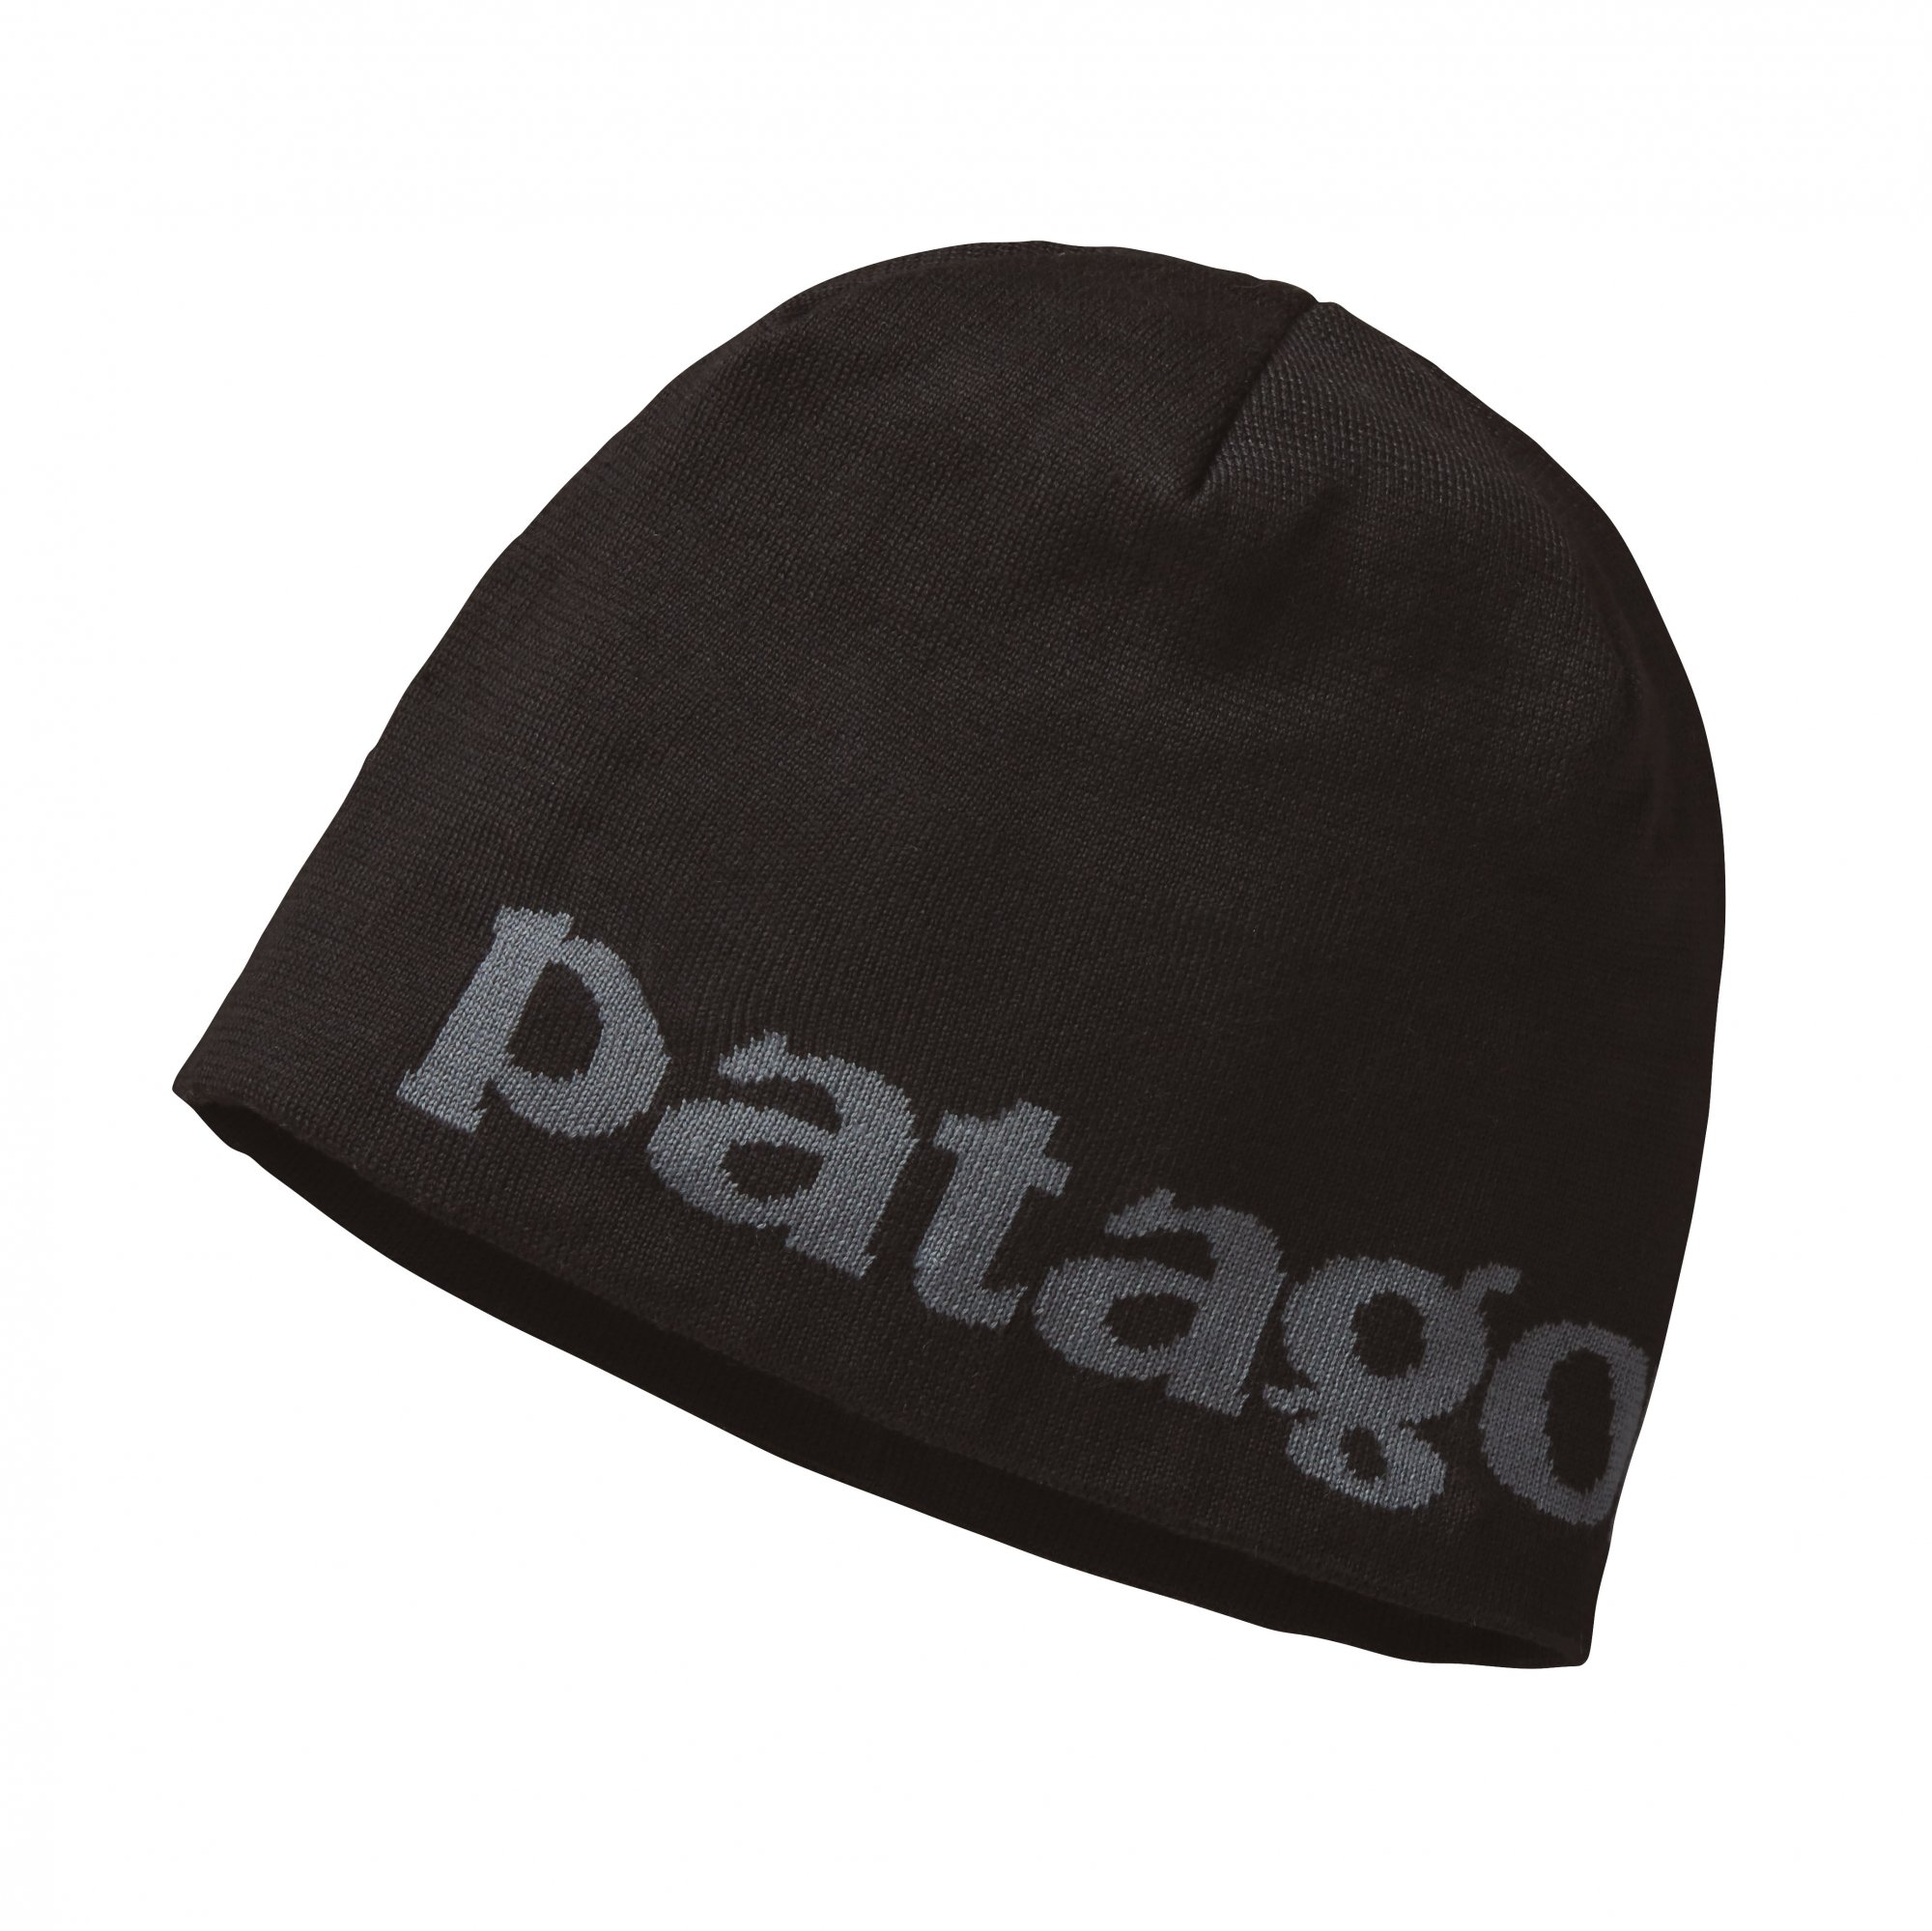 PATAGONIA Beanie Hat Logo Black